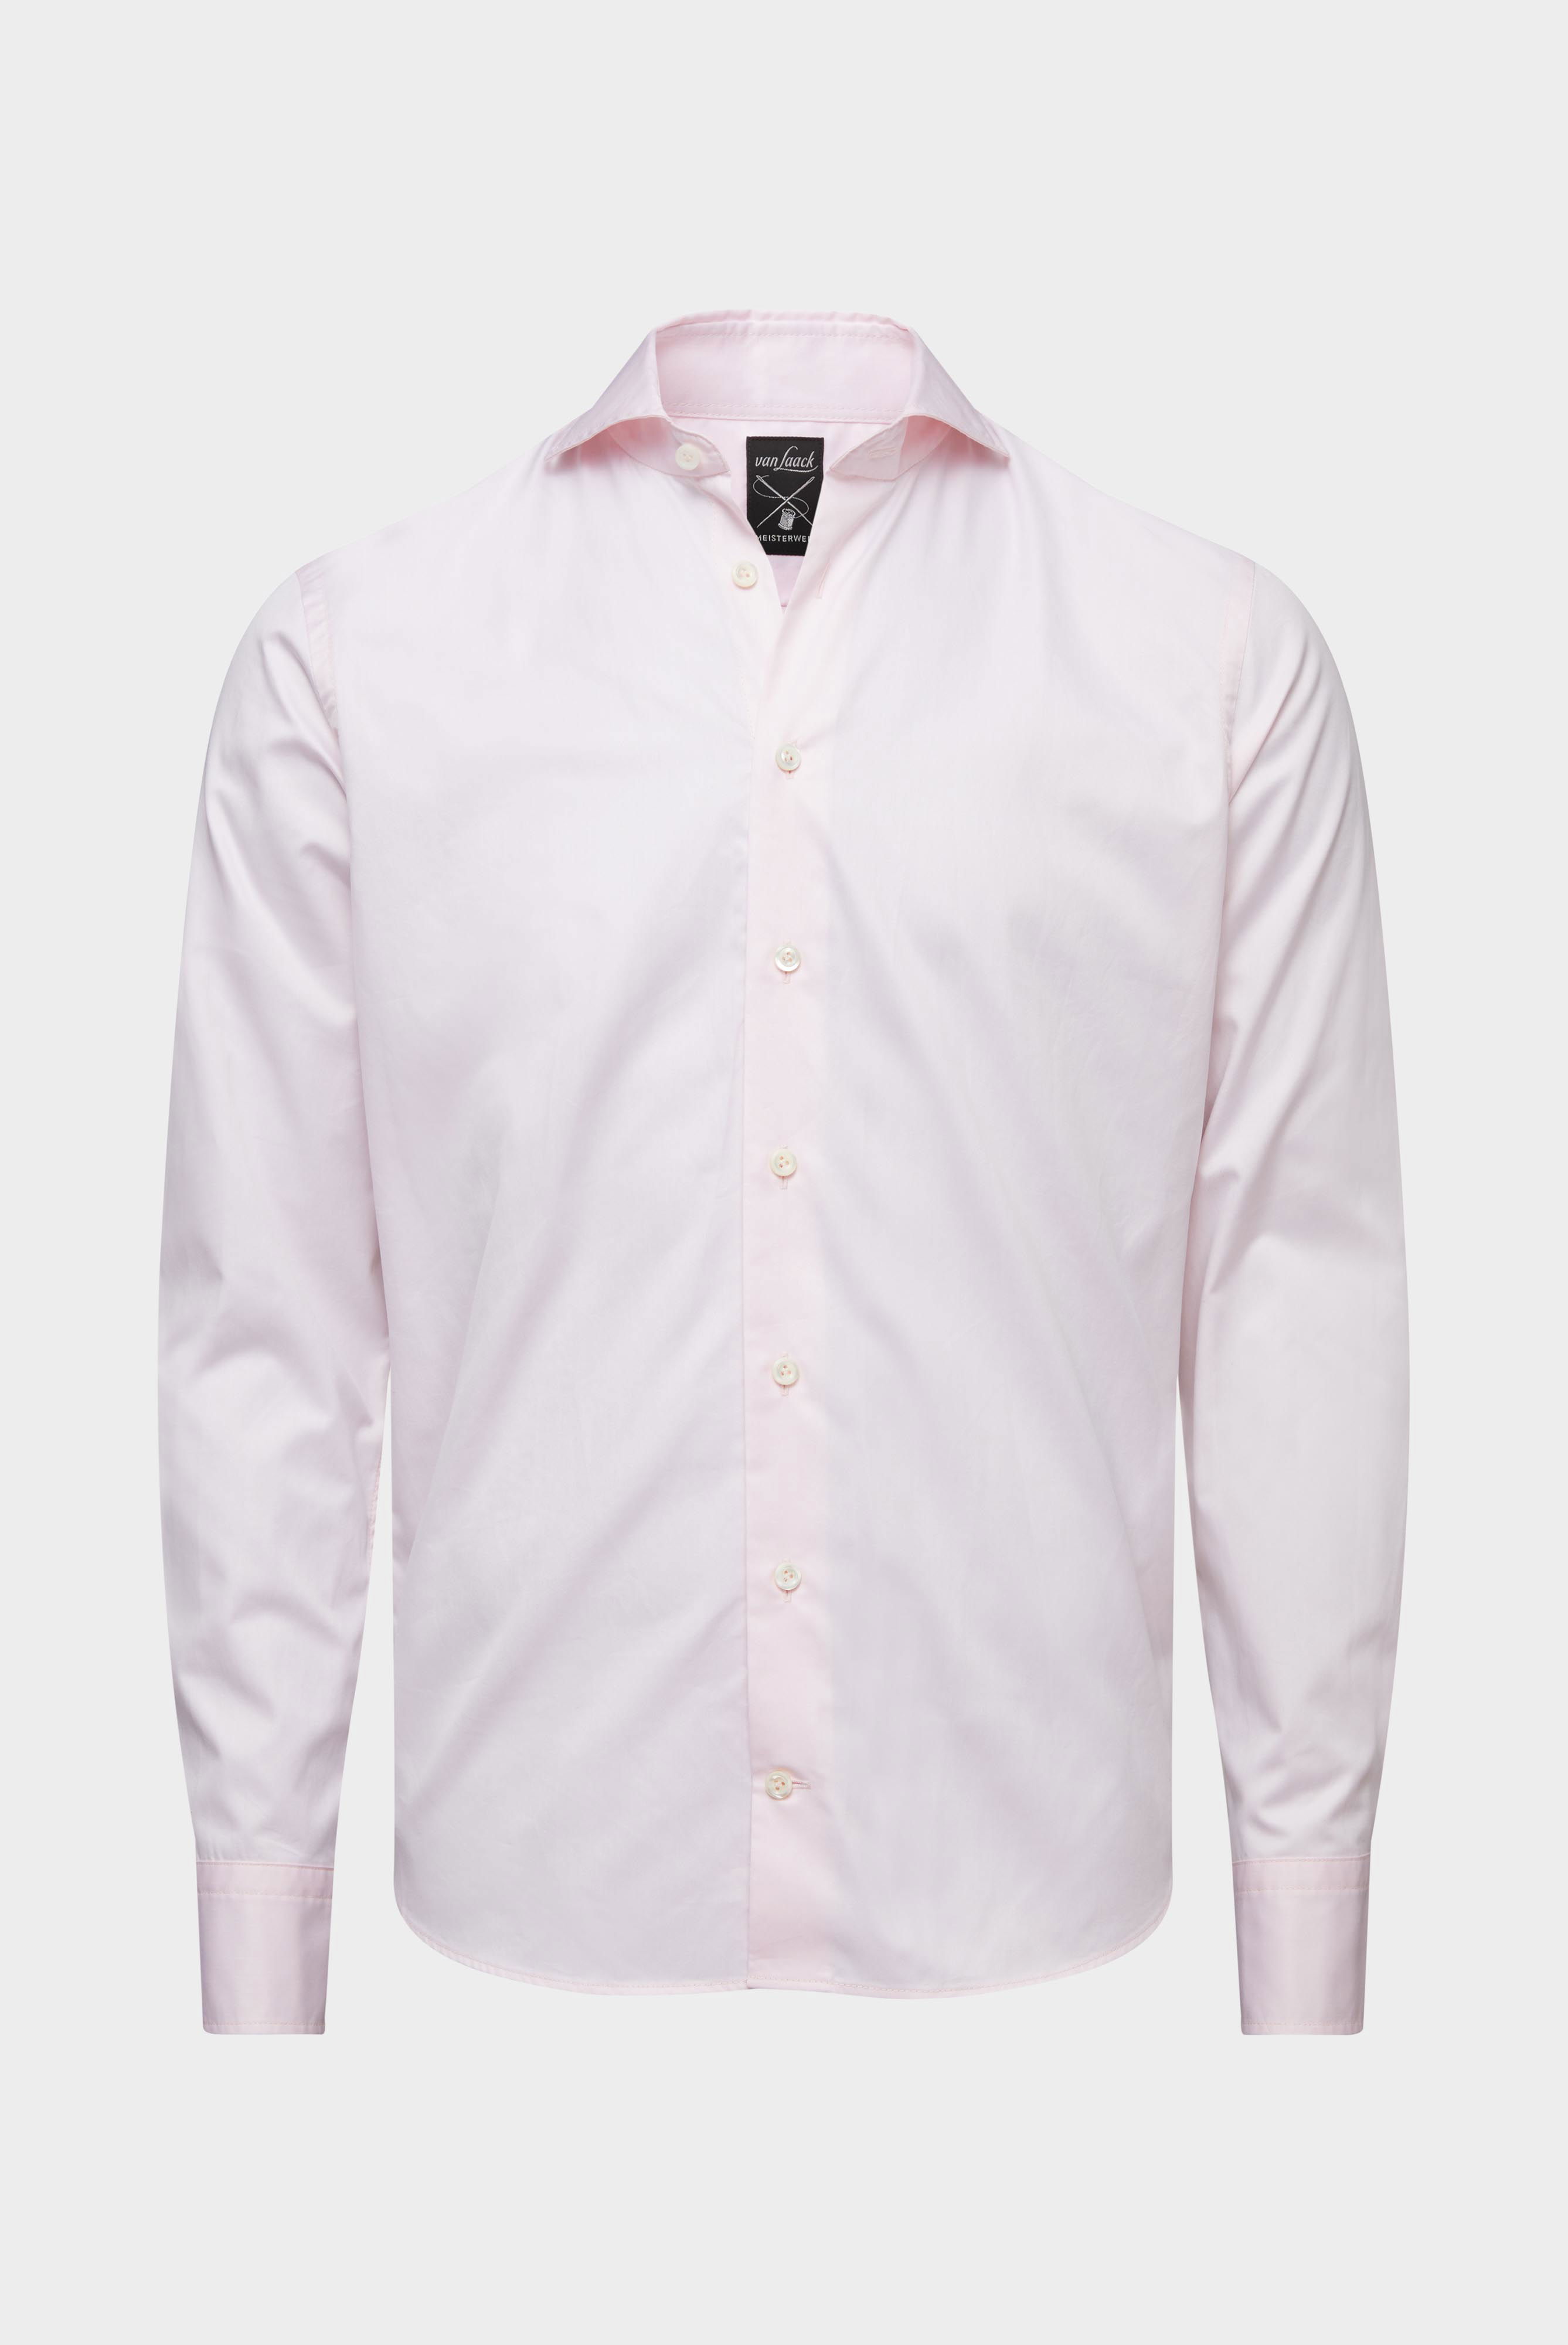 Business Hemden+Twill Hemd Slim Fit+20.2015.EB.160708.520.44